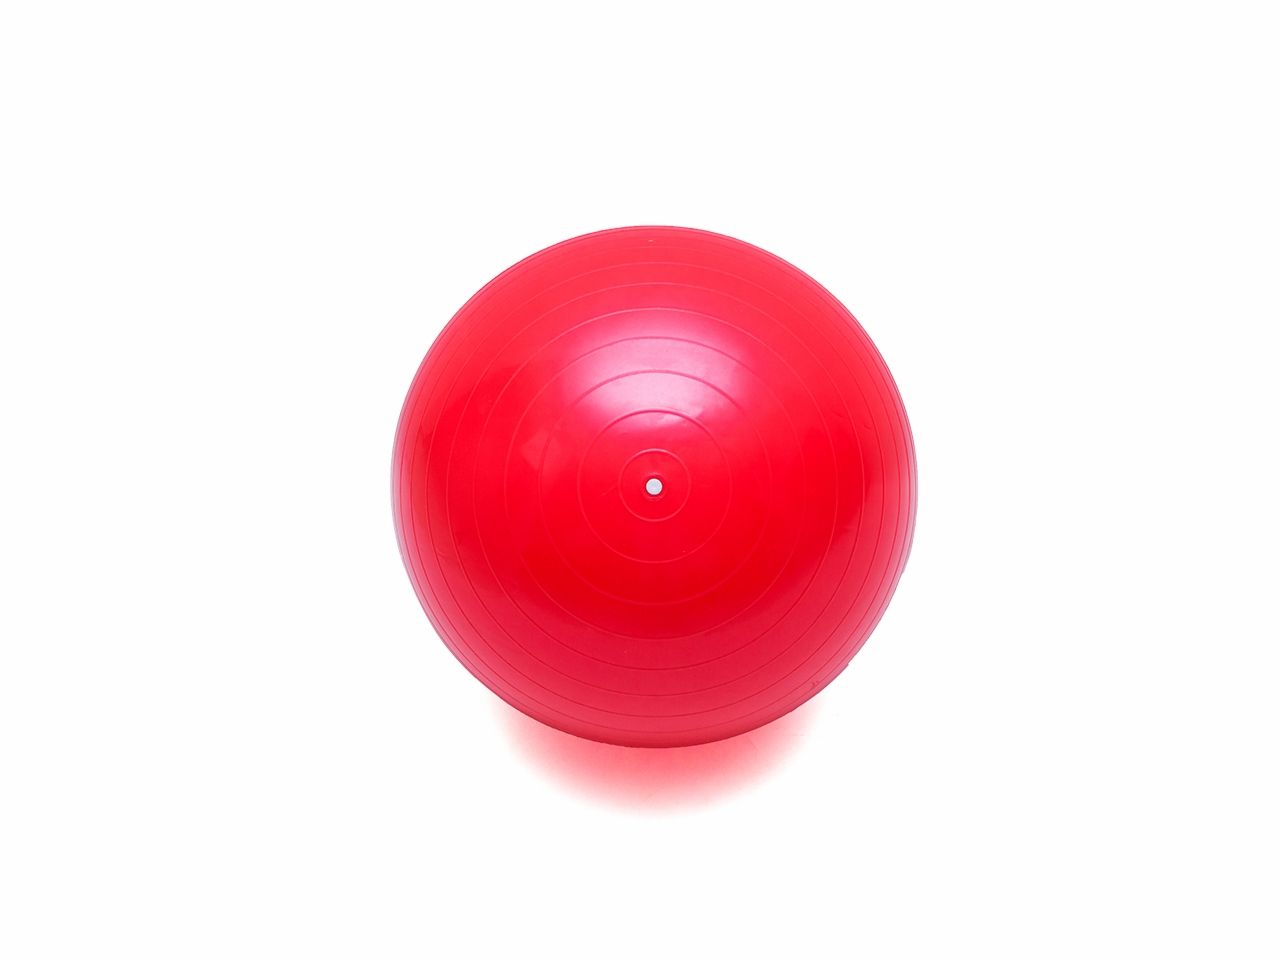 Bola de Pilates (Suíça) 45 cm - Basica/200kg - Bordo - S/Pro